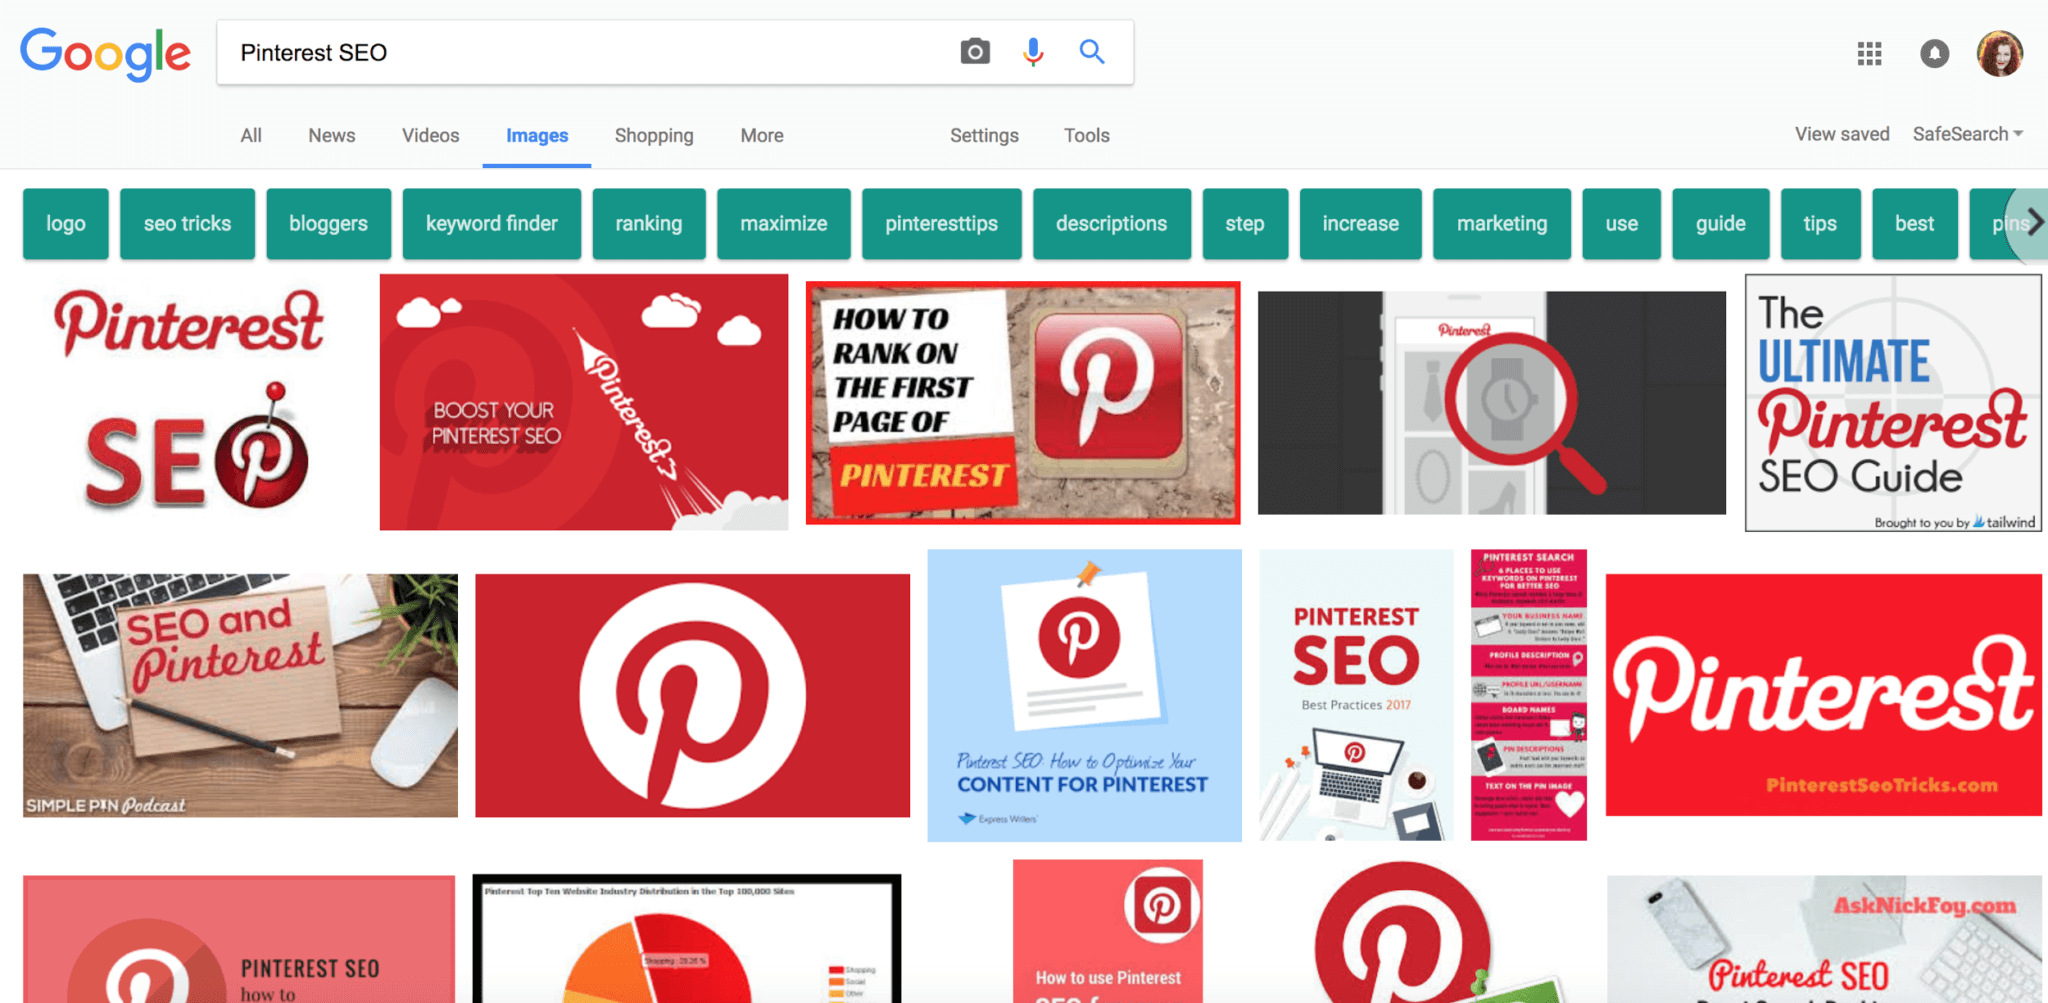 Pinterest SEO Google Search